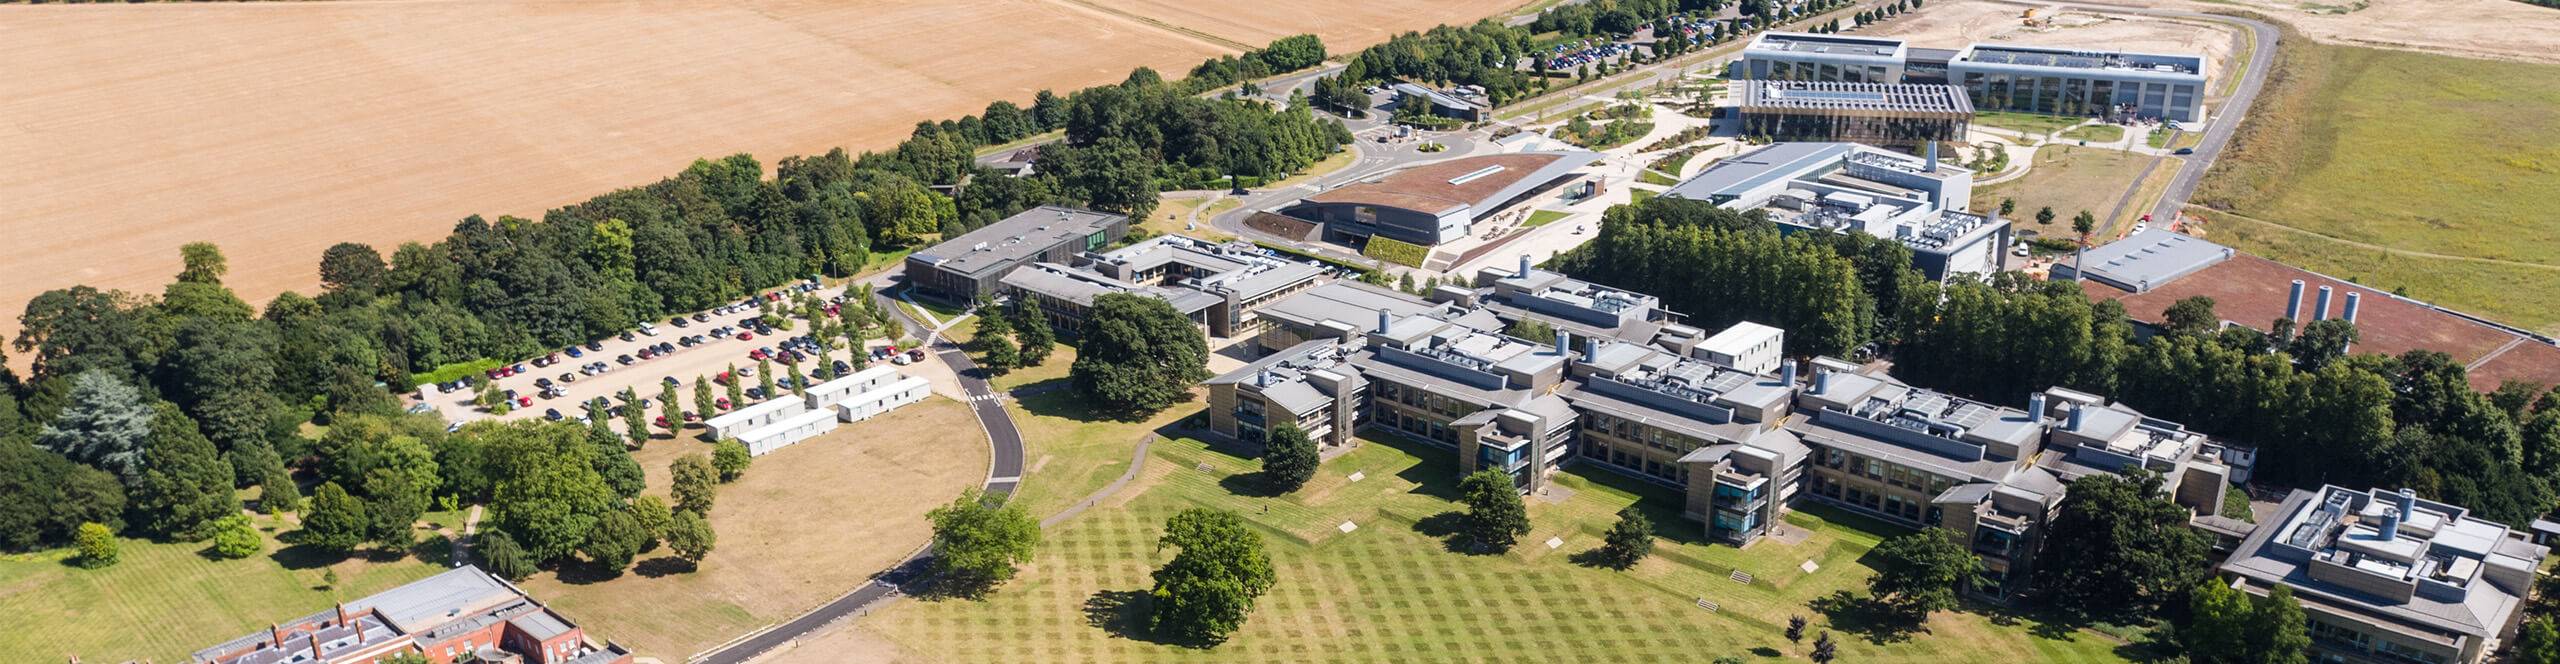 Aerial shot of Wellcome Sanger Institute